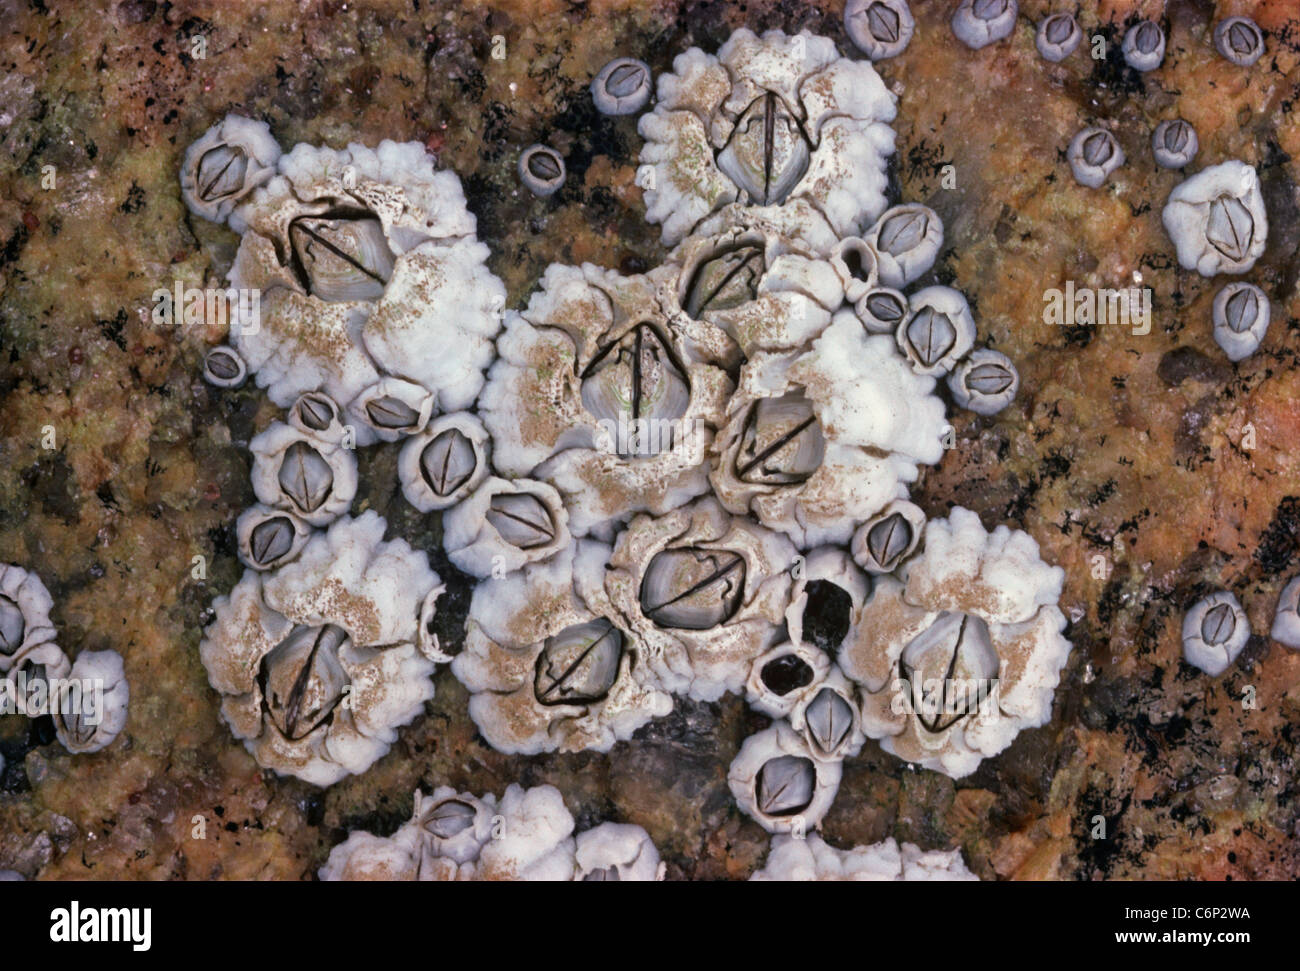 Colonia di Acorn Barnacles (Semibalanus balanoides) filtro di alimentazione. Isole Galapagos, Ecuador, Oceano Pacifico Foto Stock